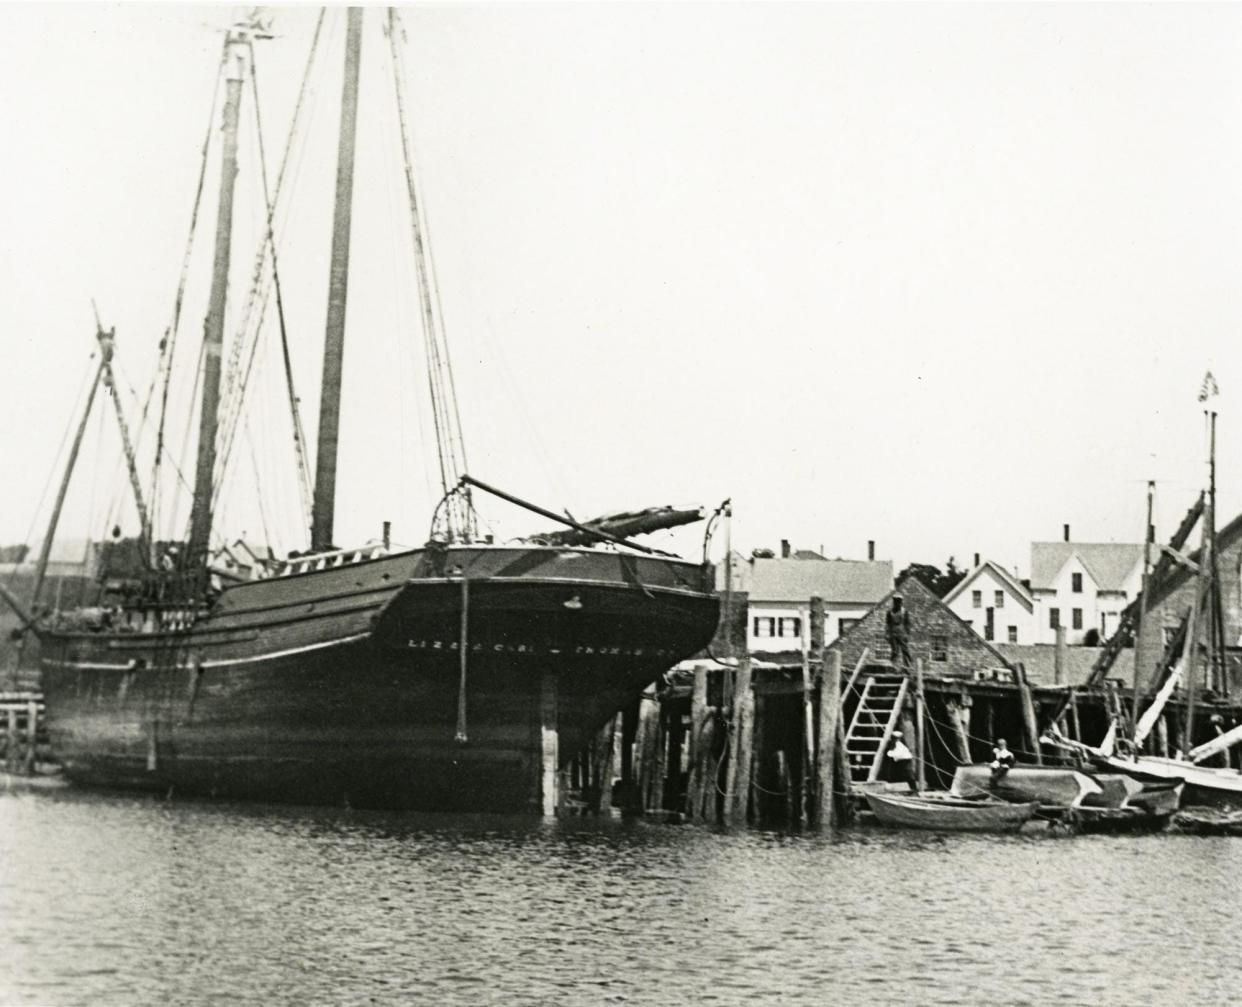 The Maine schooner Lizzie Carr is seen in port before her tragic 1905 wreck near Wallis Sands Beach in Rye.